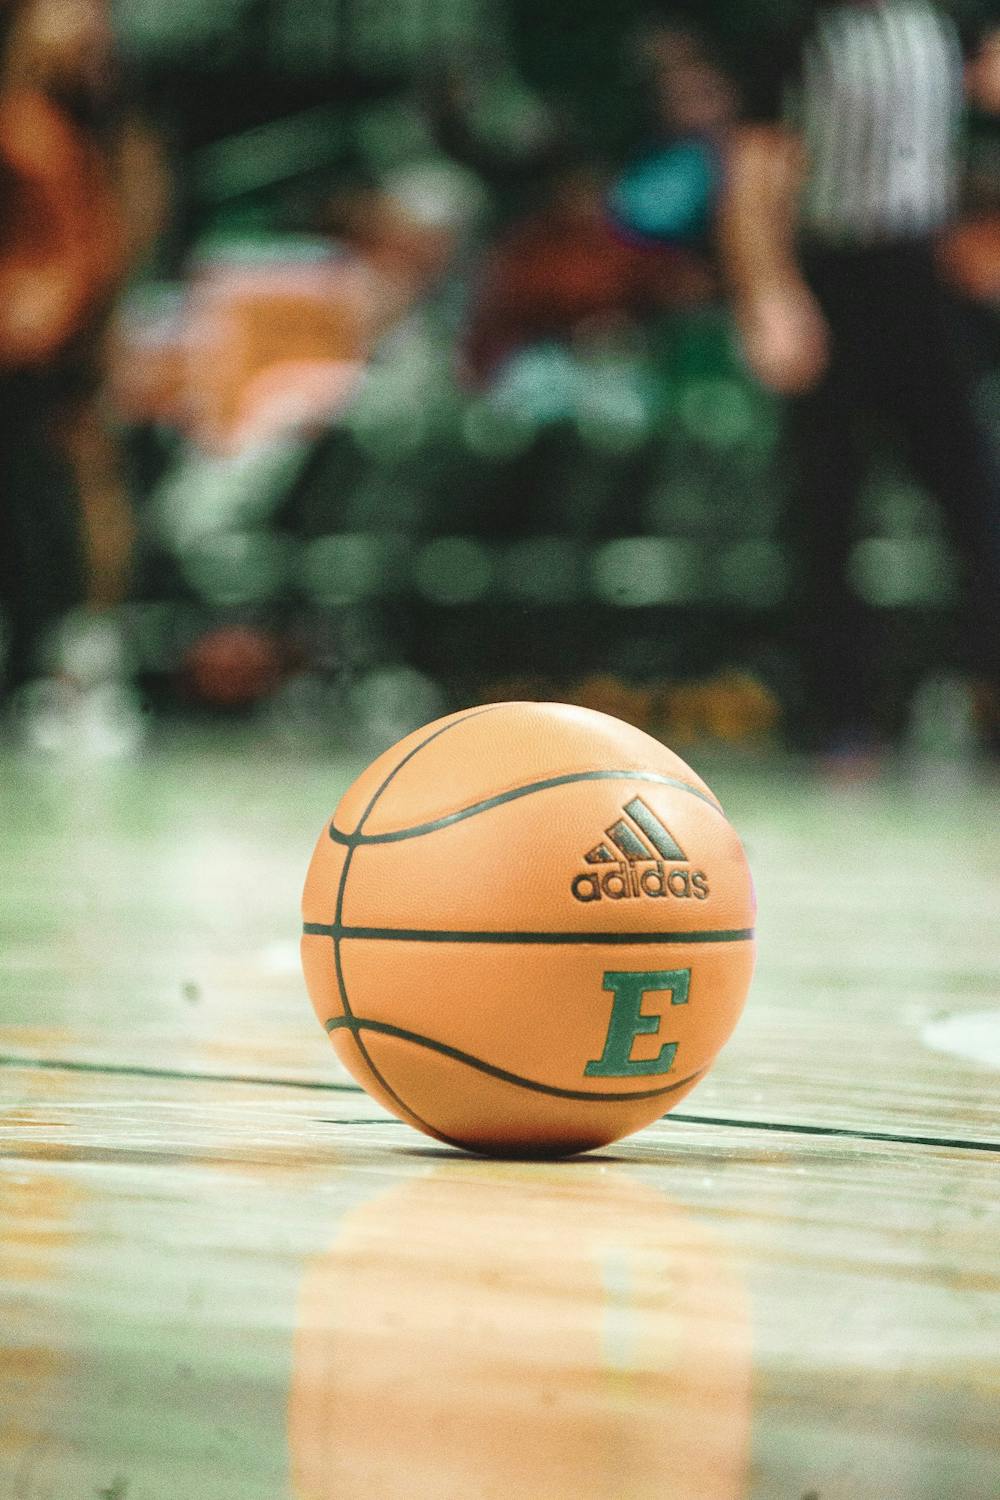 EMU women's basketball team ends losing streak in overtime victory, 66-61